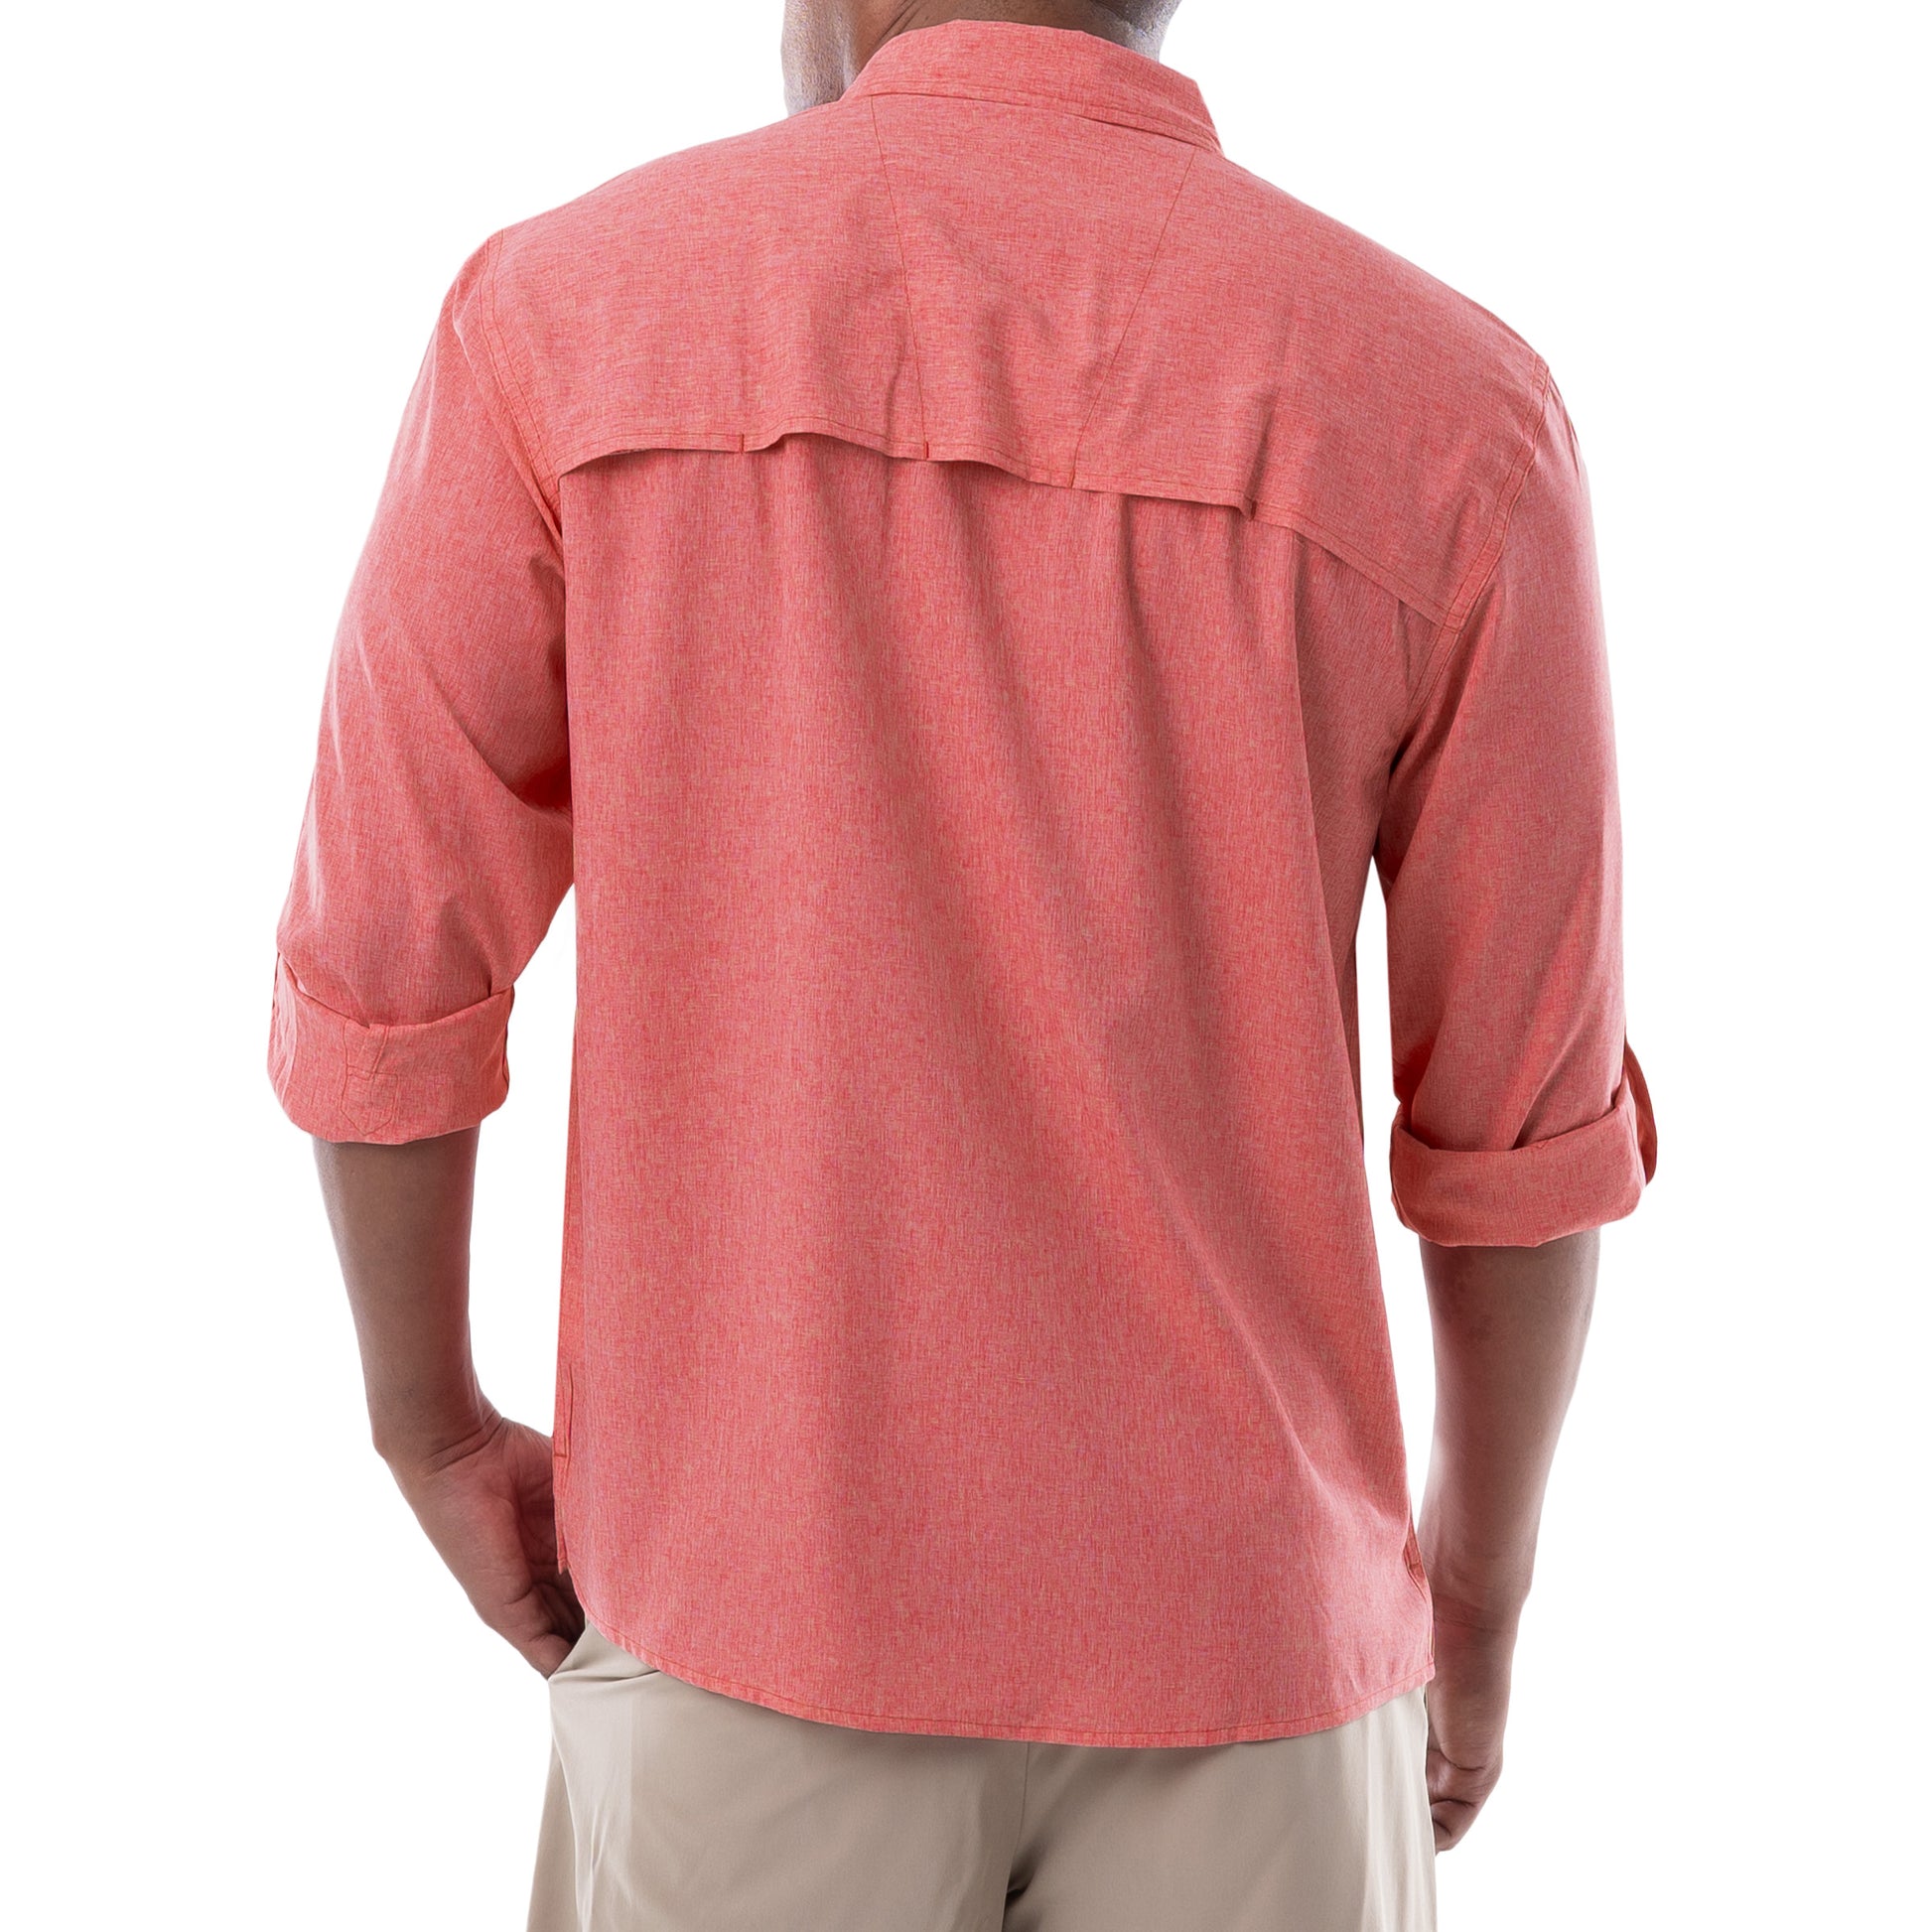 Men's Long Sleeve Heather Textured Fishing Shirt